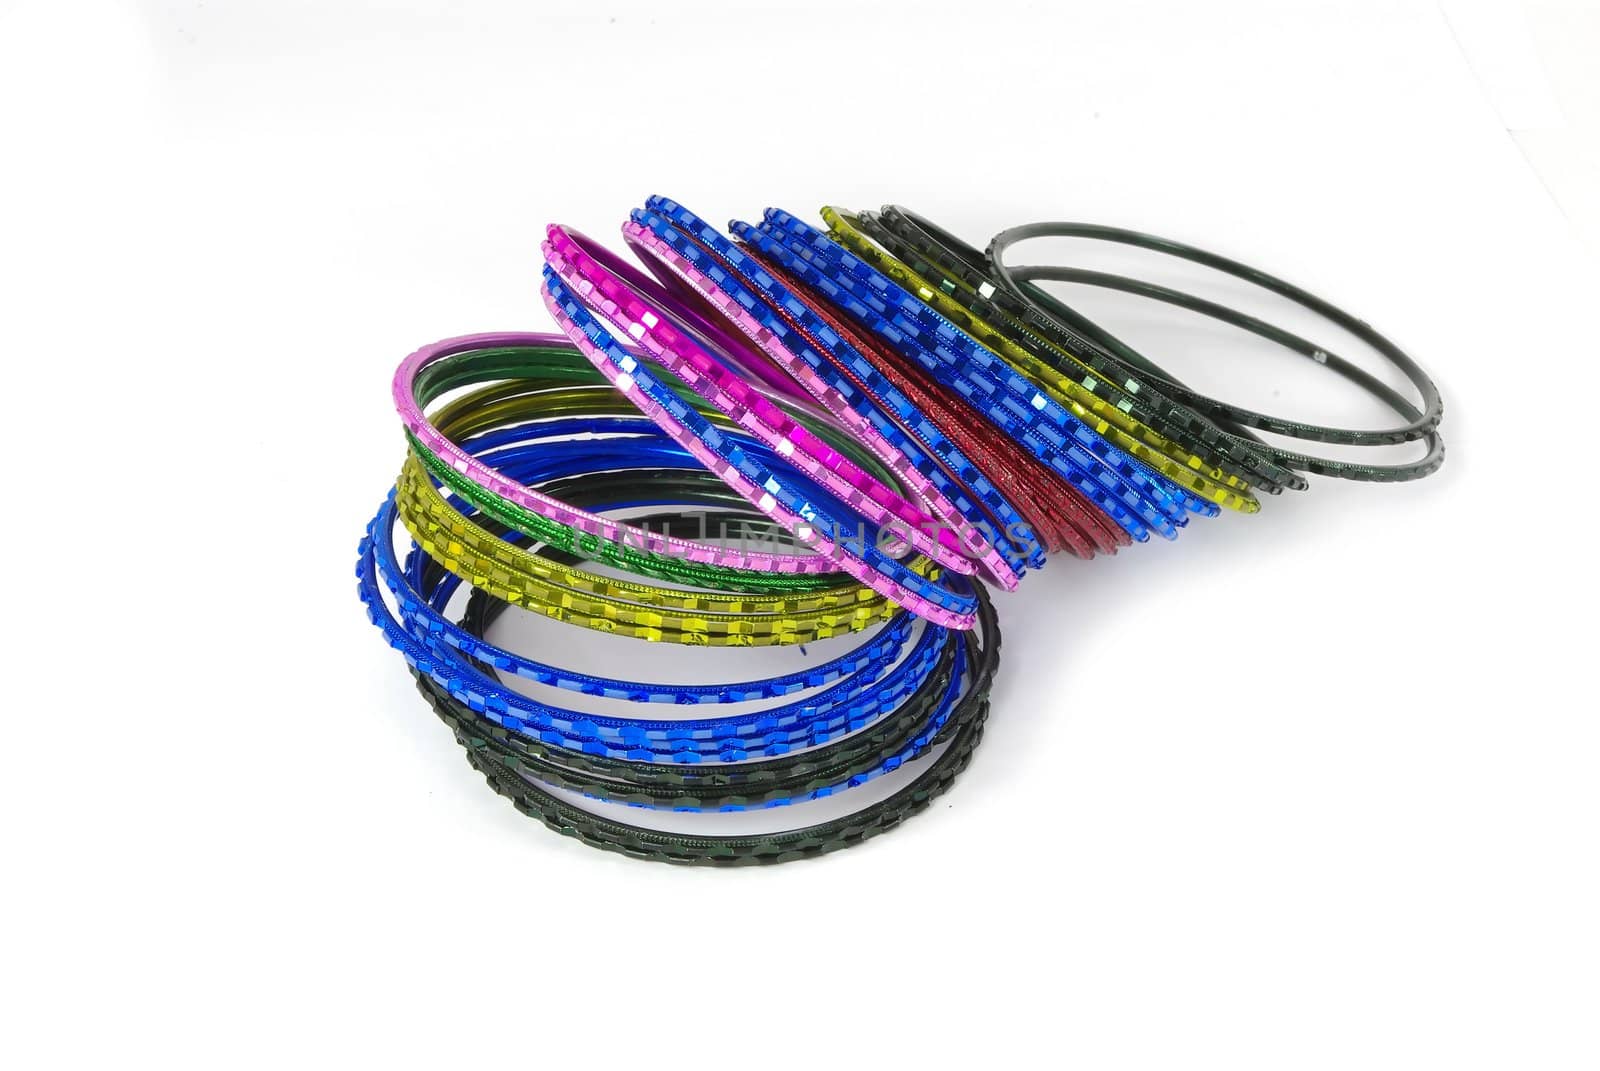 Coloured metallic bracelet rings by Vitamin